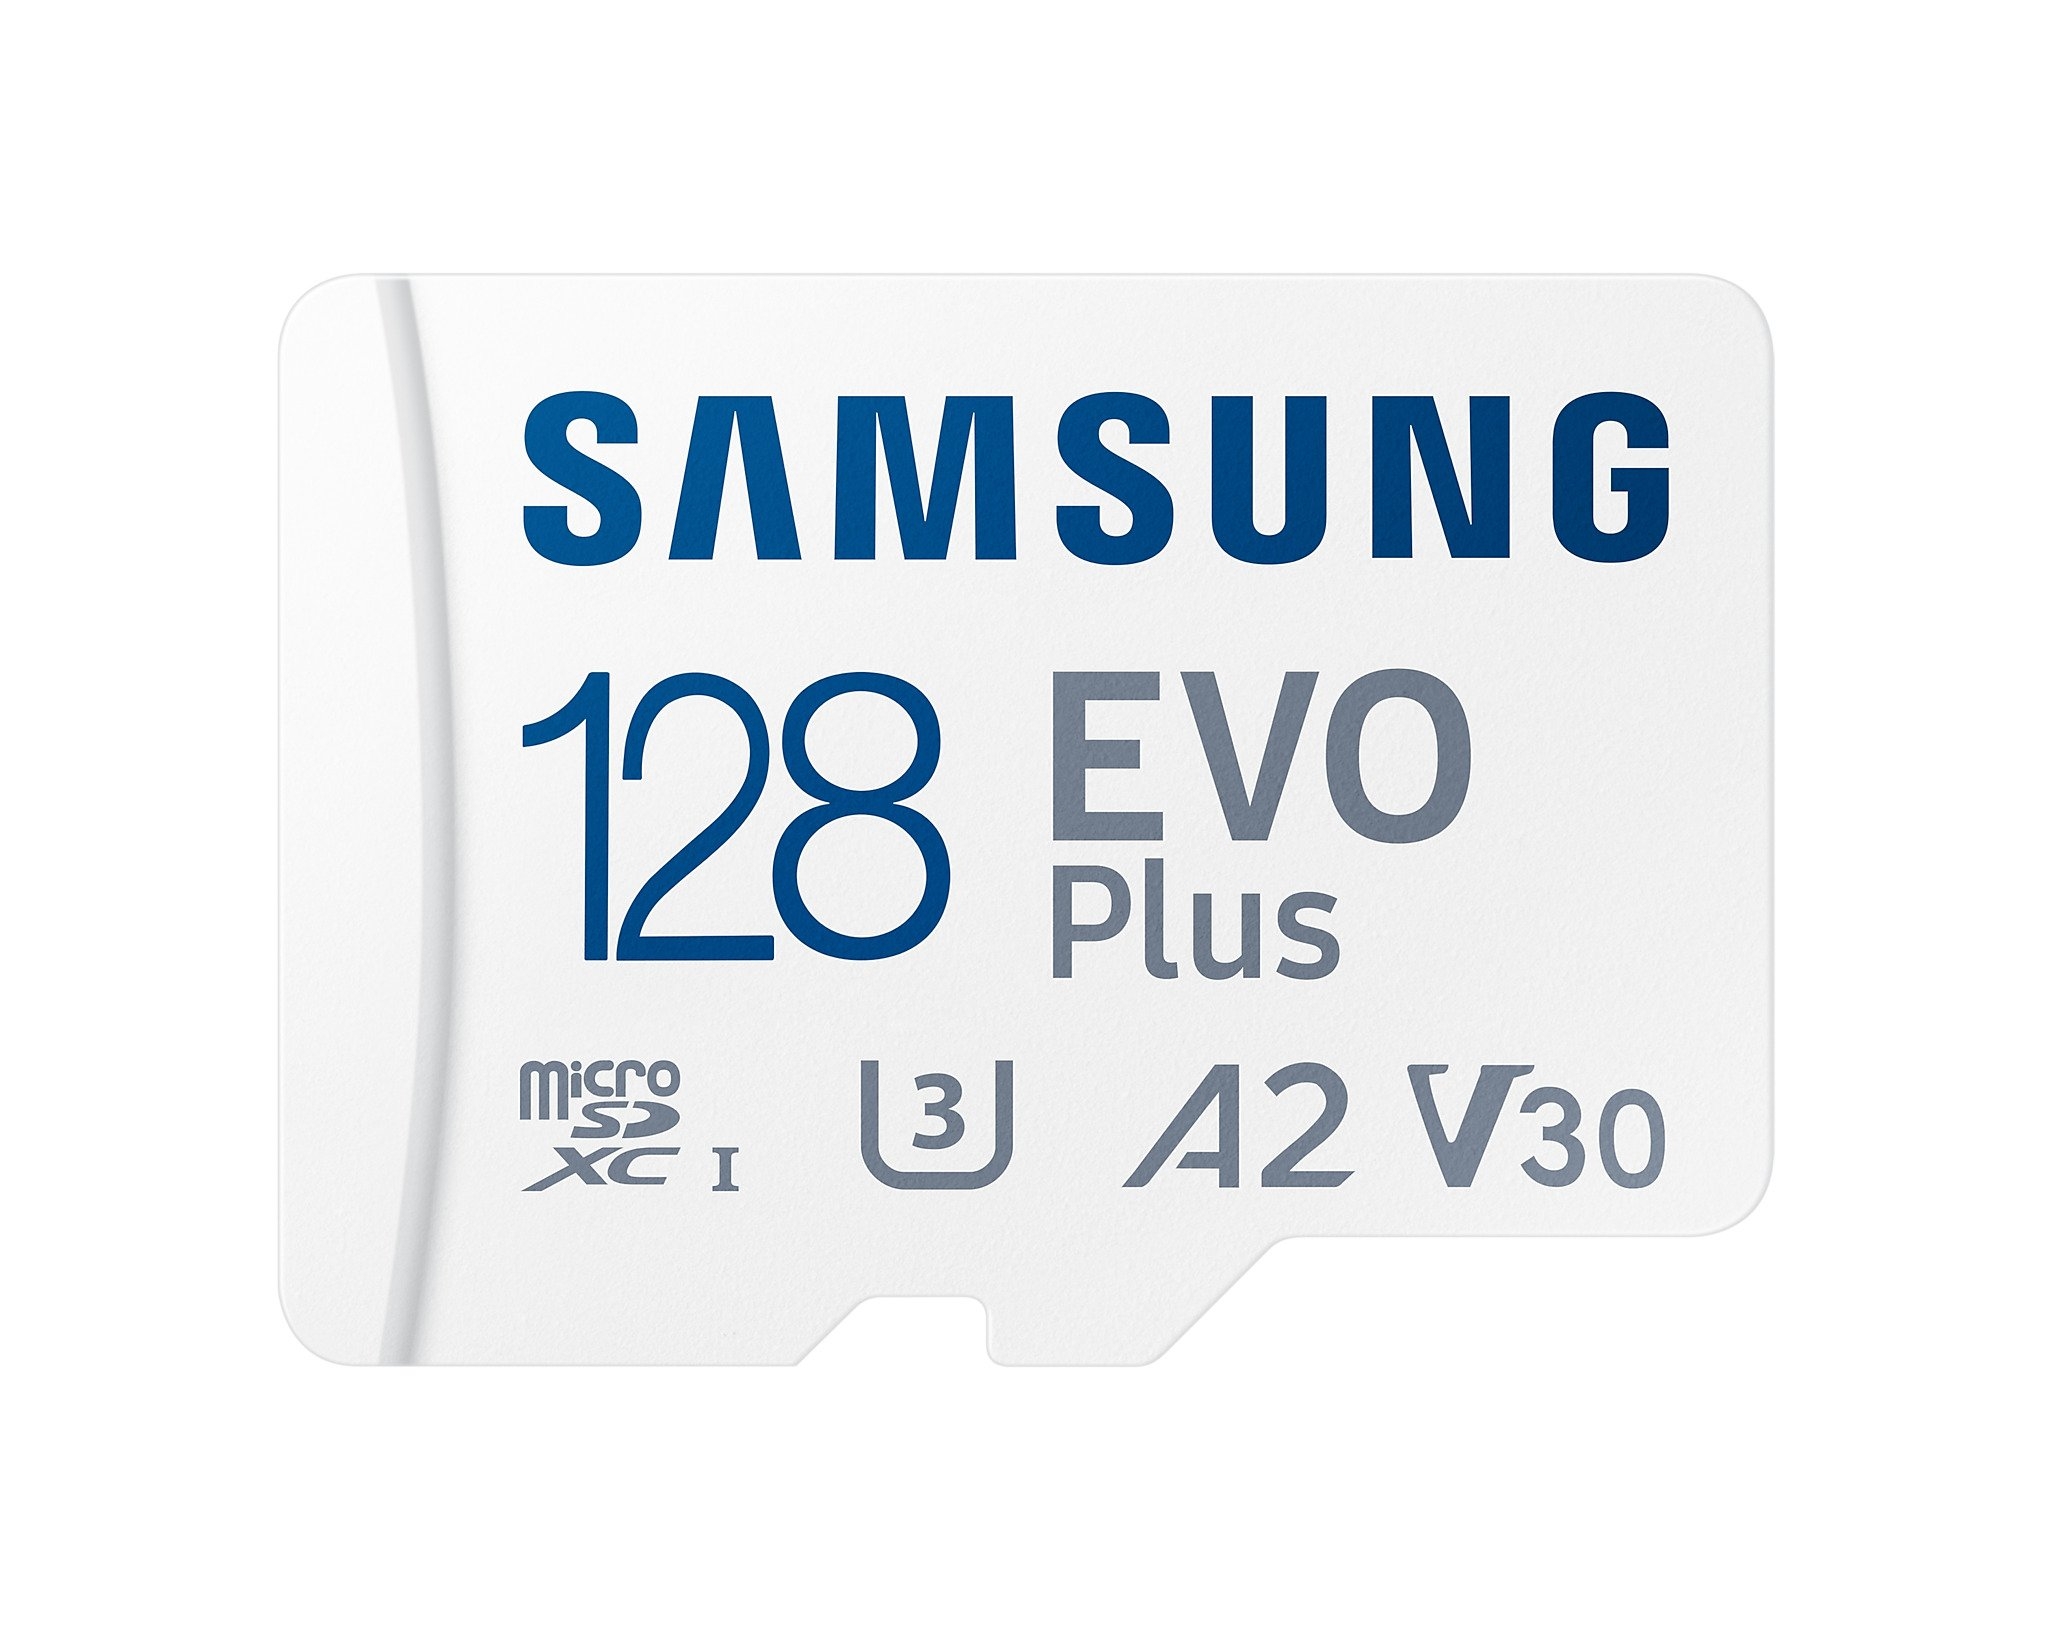 SamSung EVO Plus microSD Card 130MB/s with Adapter – 128GB